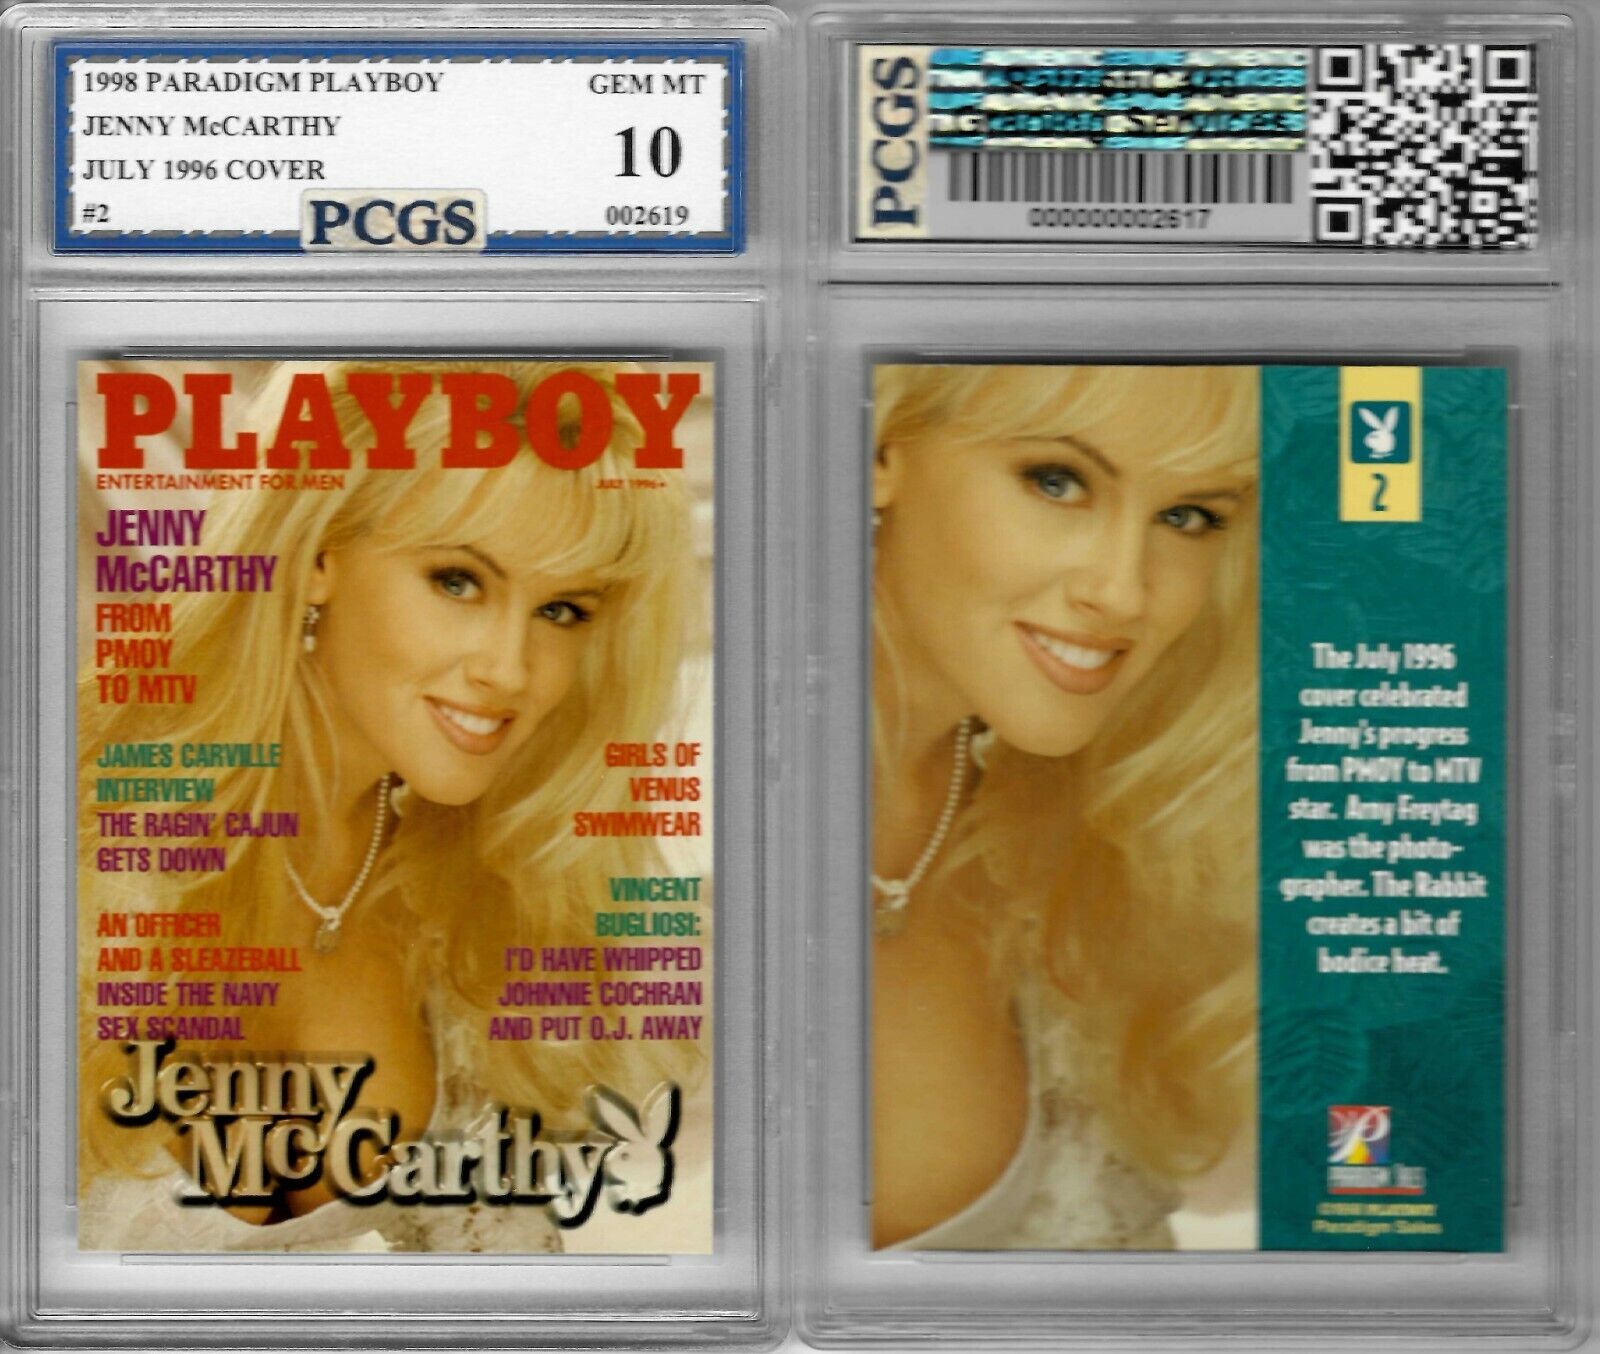 1998 Playboy Jenny McCarthy July 1996 Cover Card Graded FCGS 10 GEM MINT